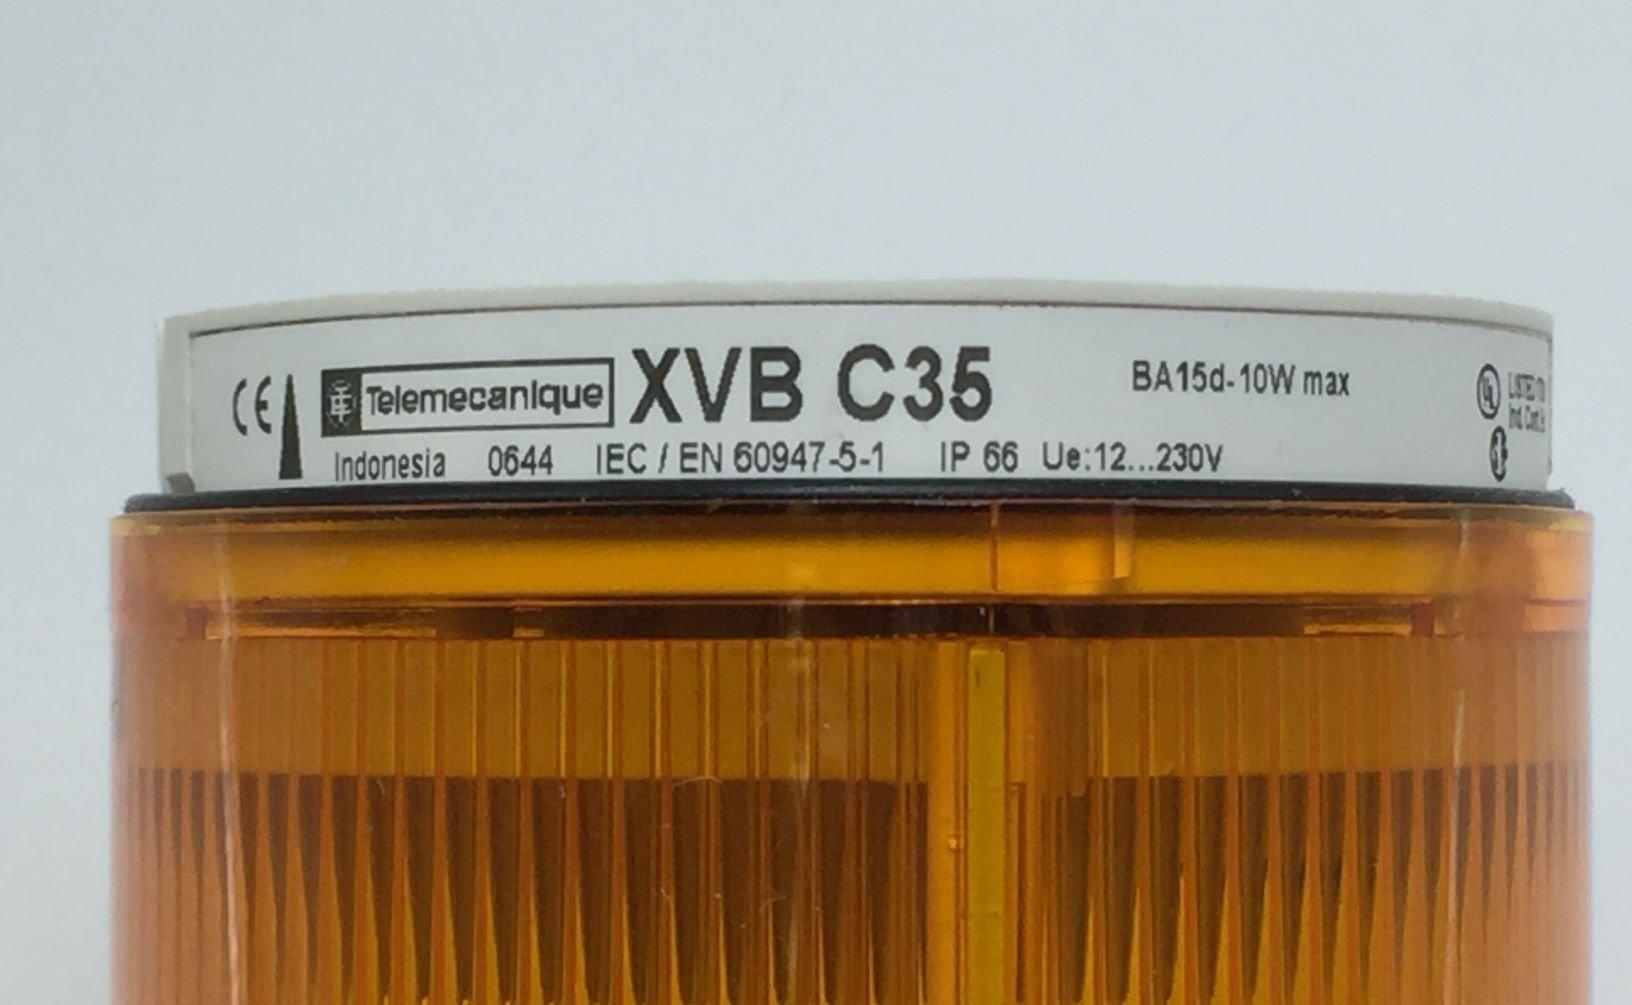 NEW TELEMECANIQUE XVB-C35 ORANGE STEADY UNIT 250V PN# 084508 